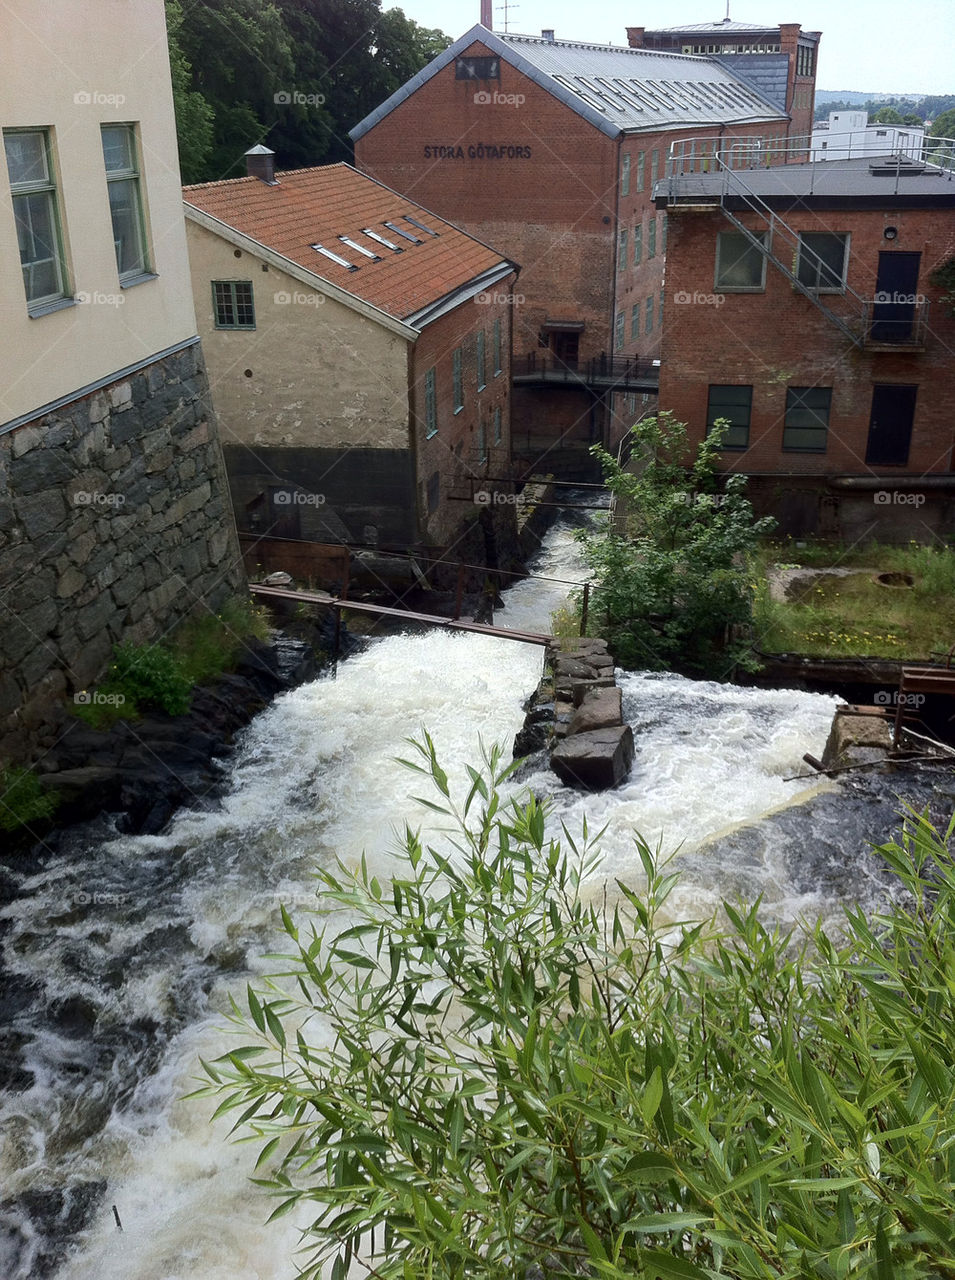 sweden water waterfall industry by thobbz